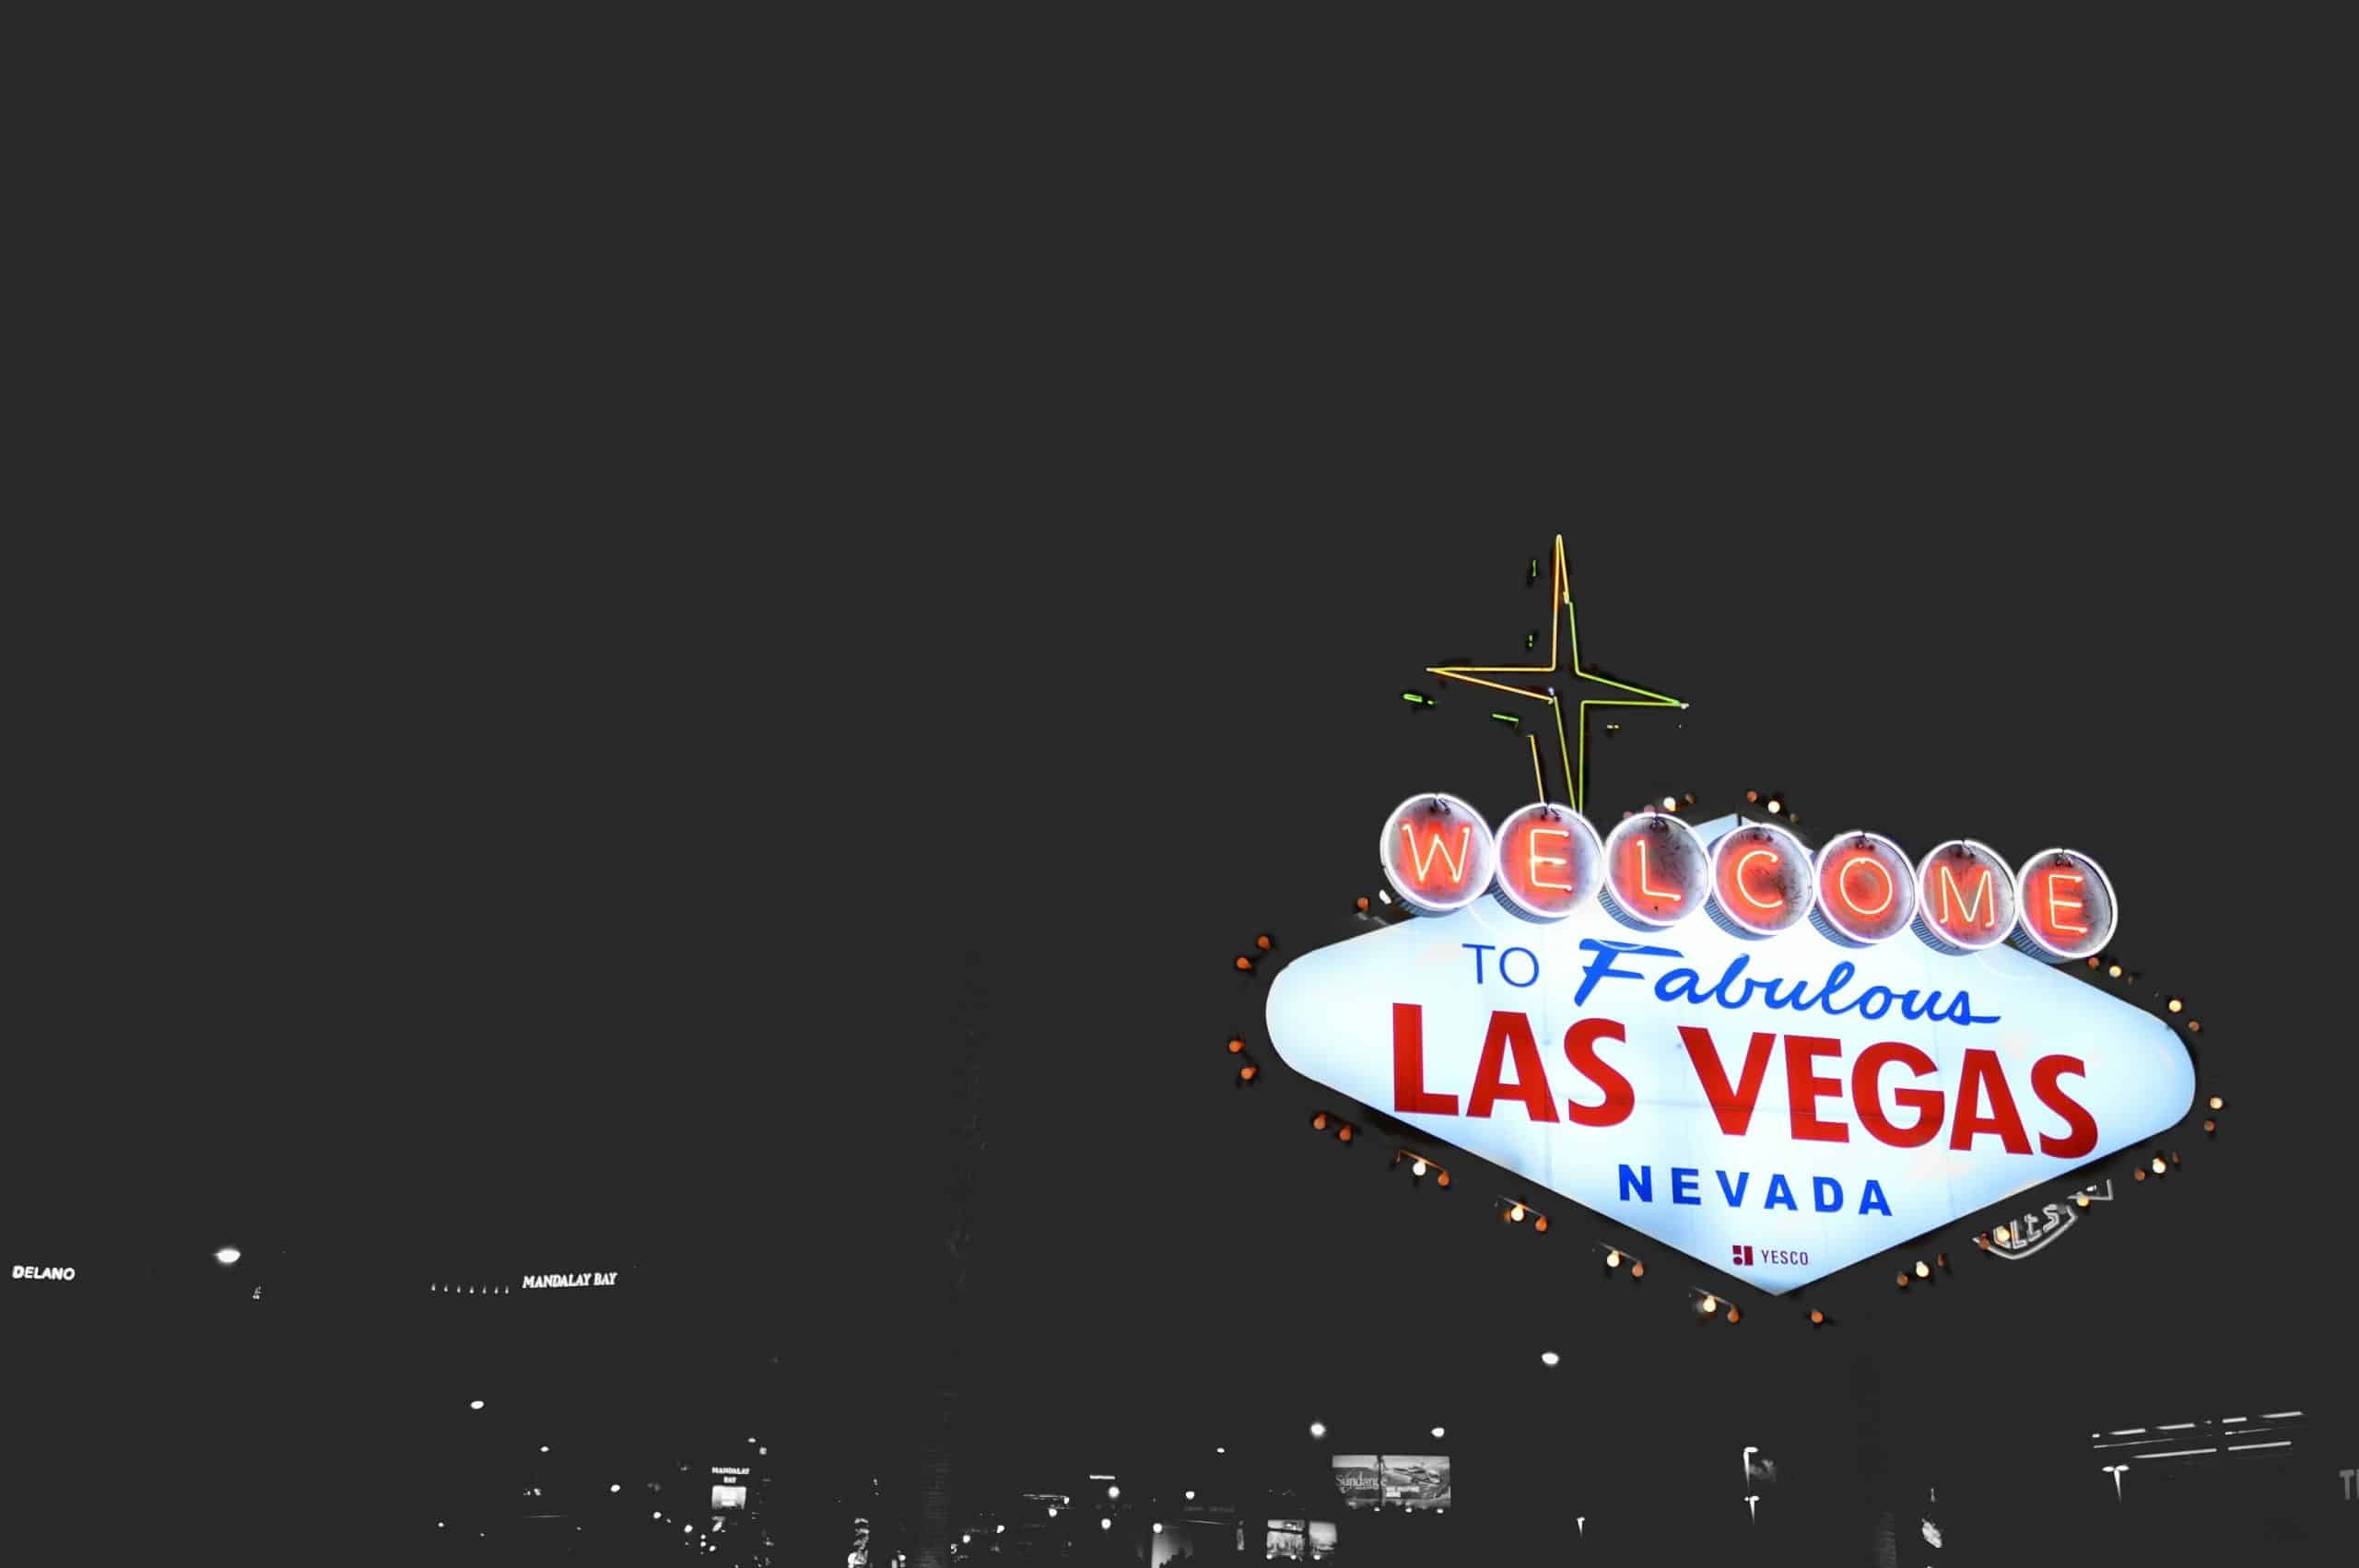 Las Vegas road sign at night